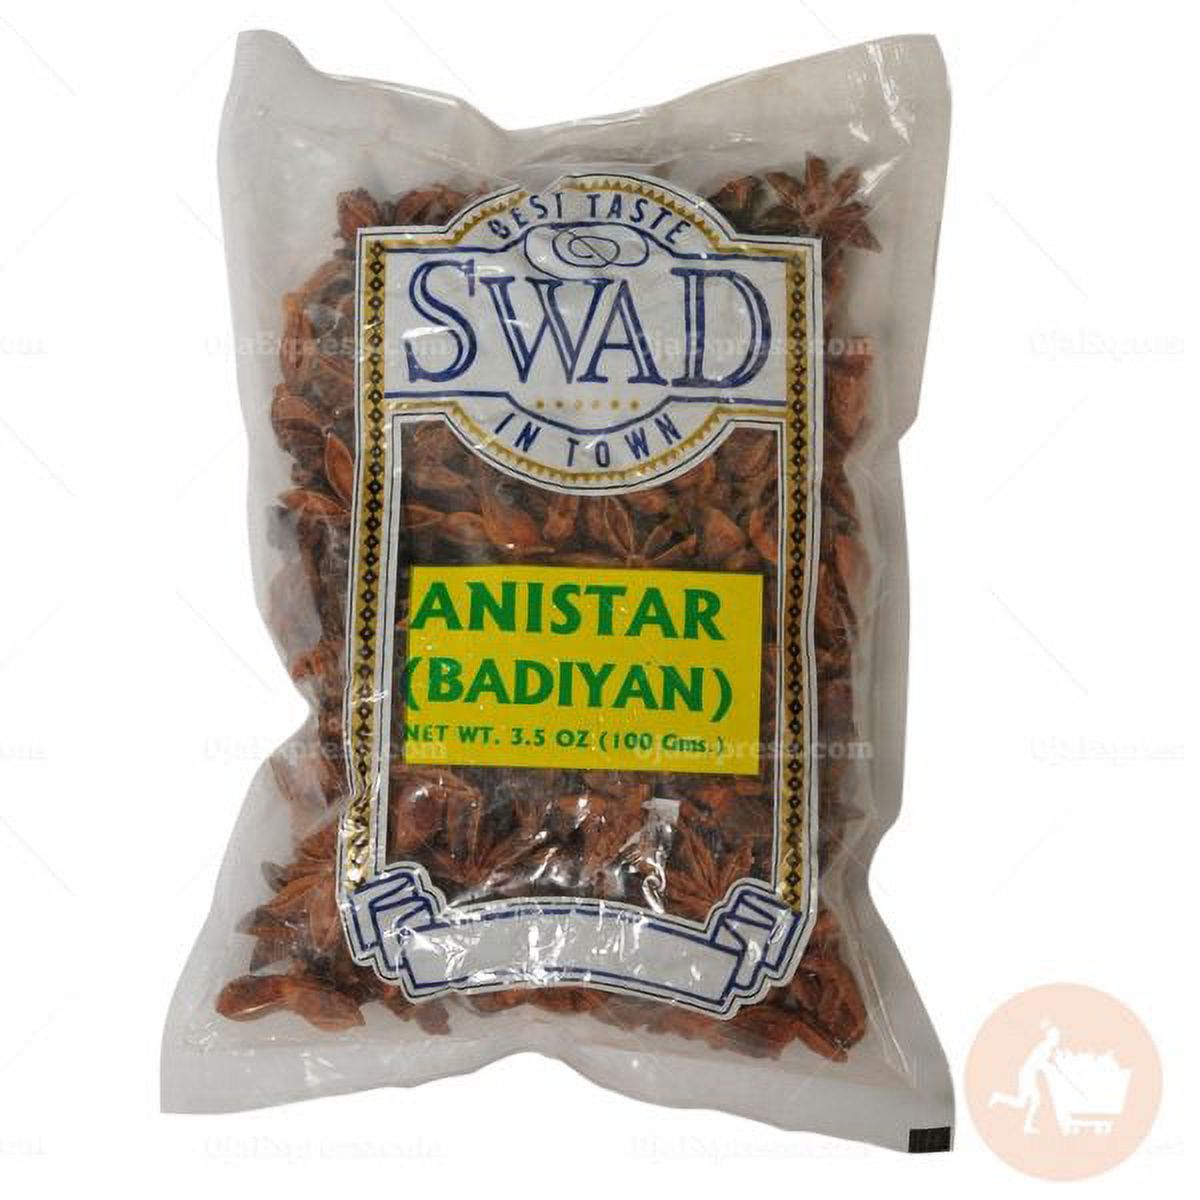 SWAD Anistar ( Badiyan ) - 100 Grams (3.52oz) - image 1 of 1